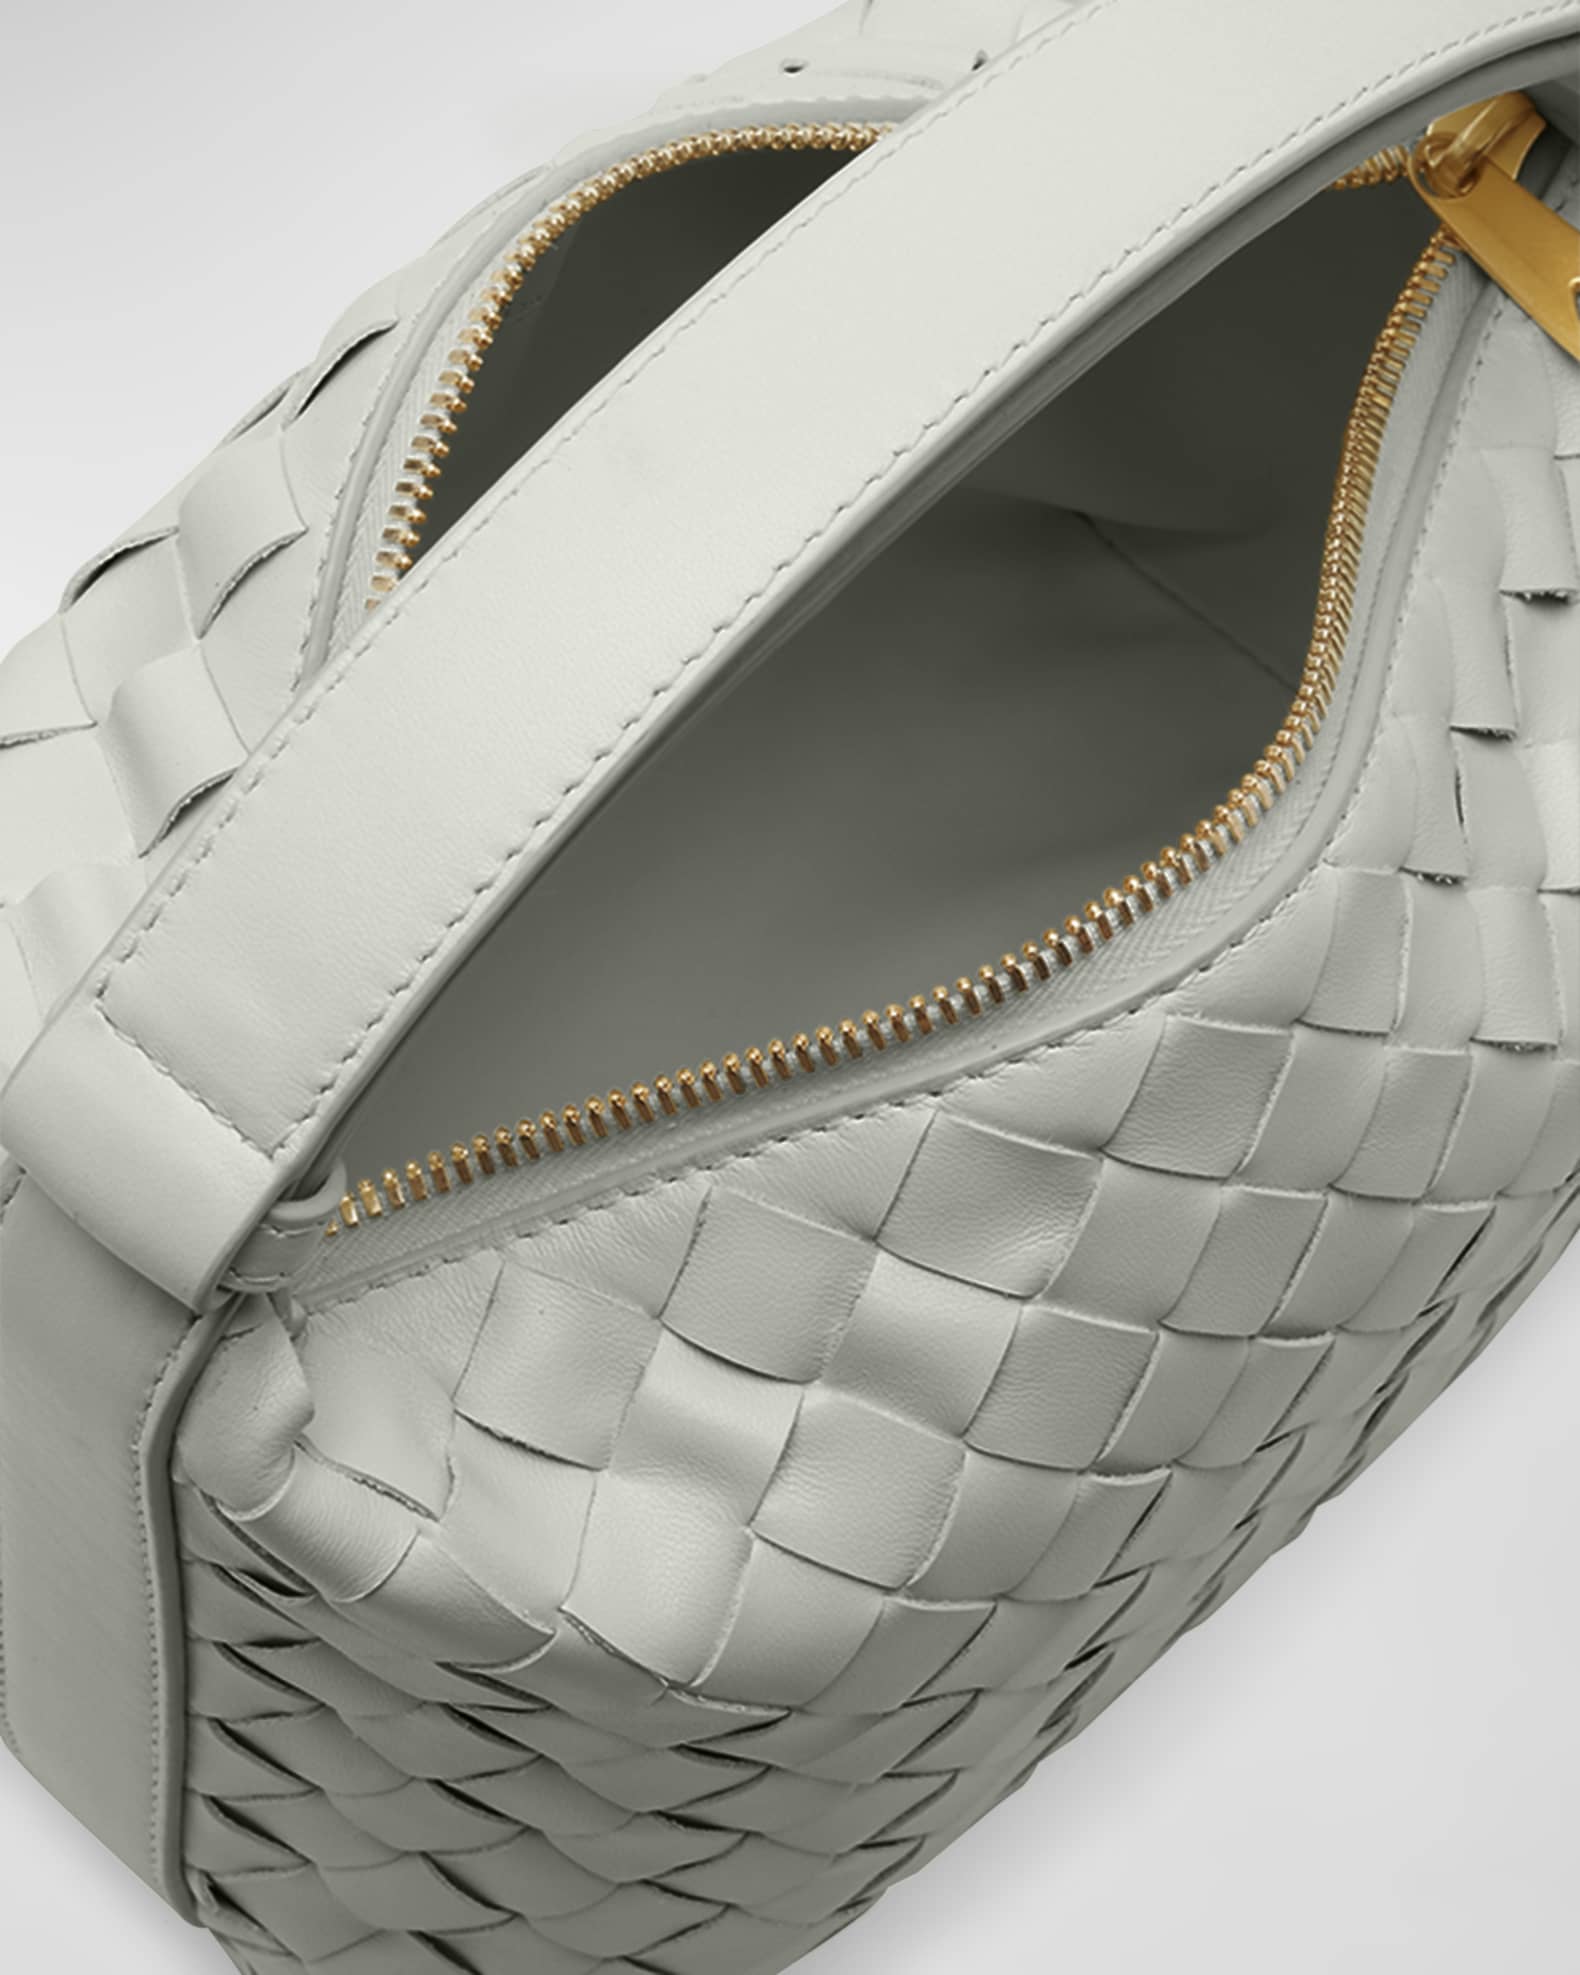 Women's Mini Wallace Intrecciato Leather Shoulder Bag - Agate Grey